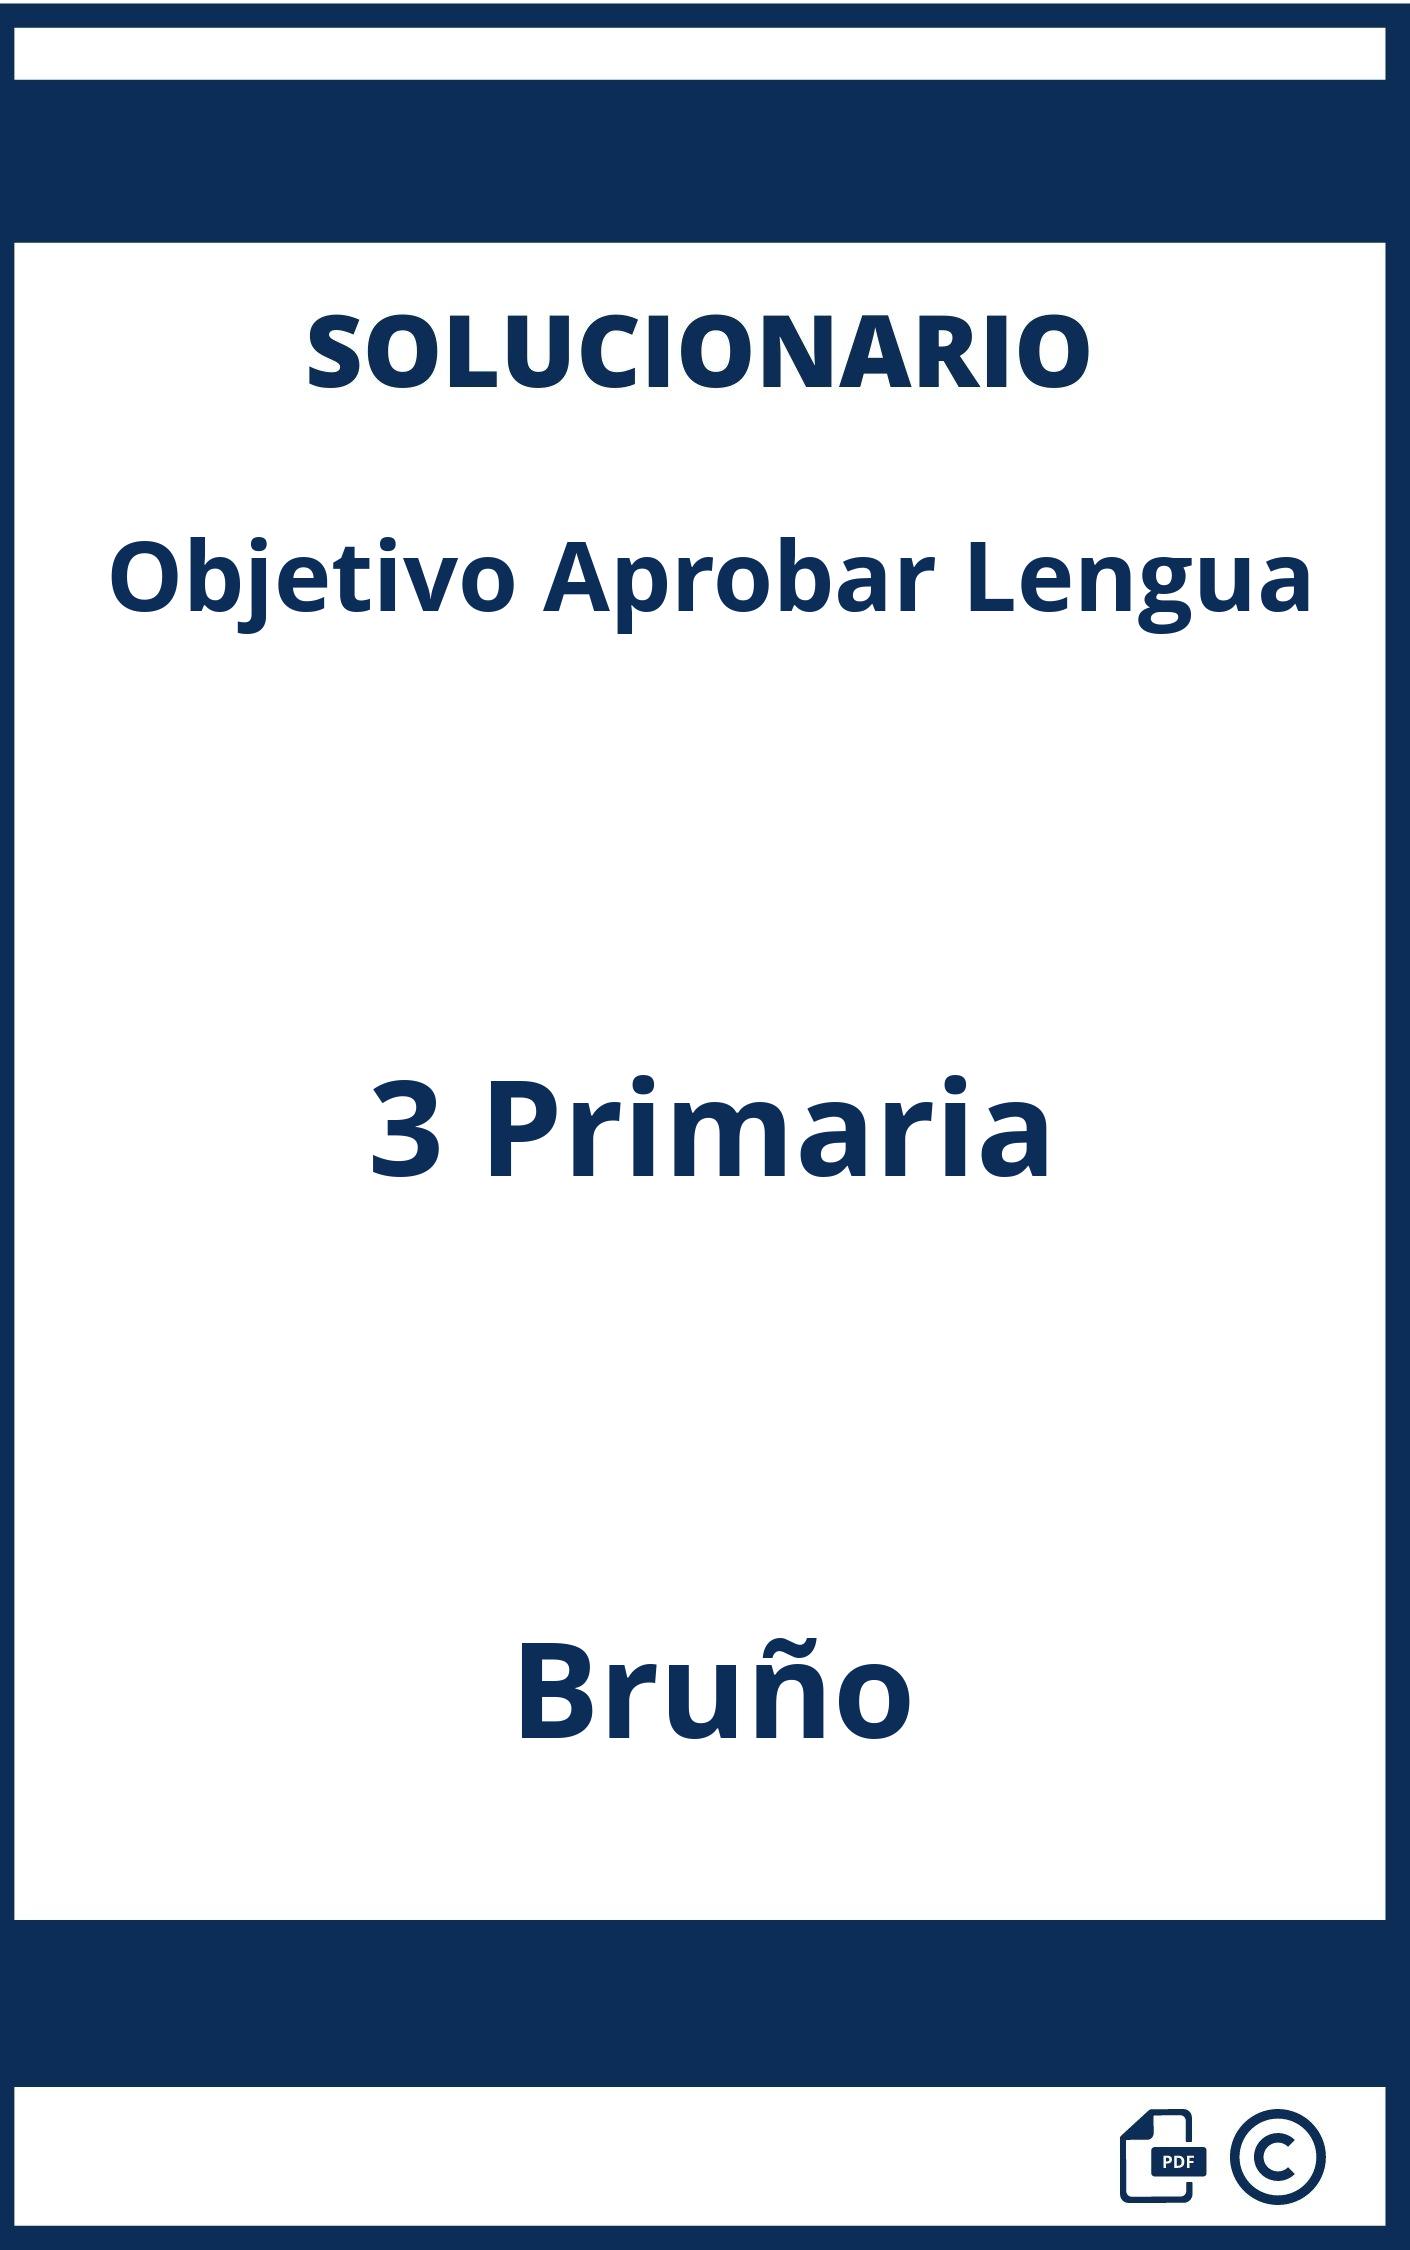 Solucionario Objetivo Aprobar Lengua 3 Primaria Bruño